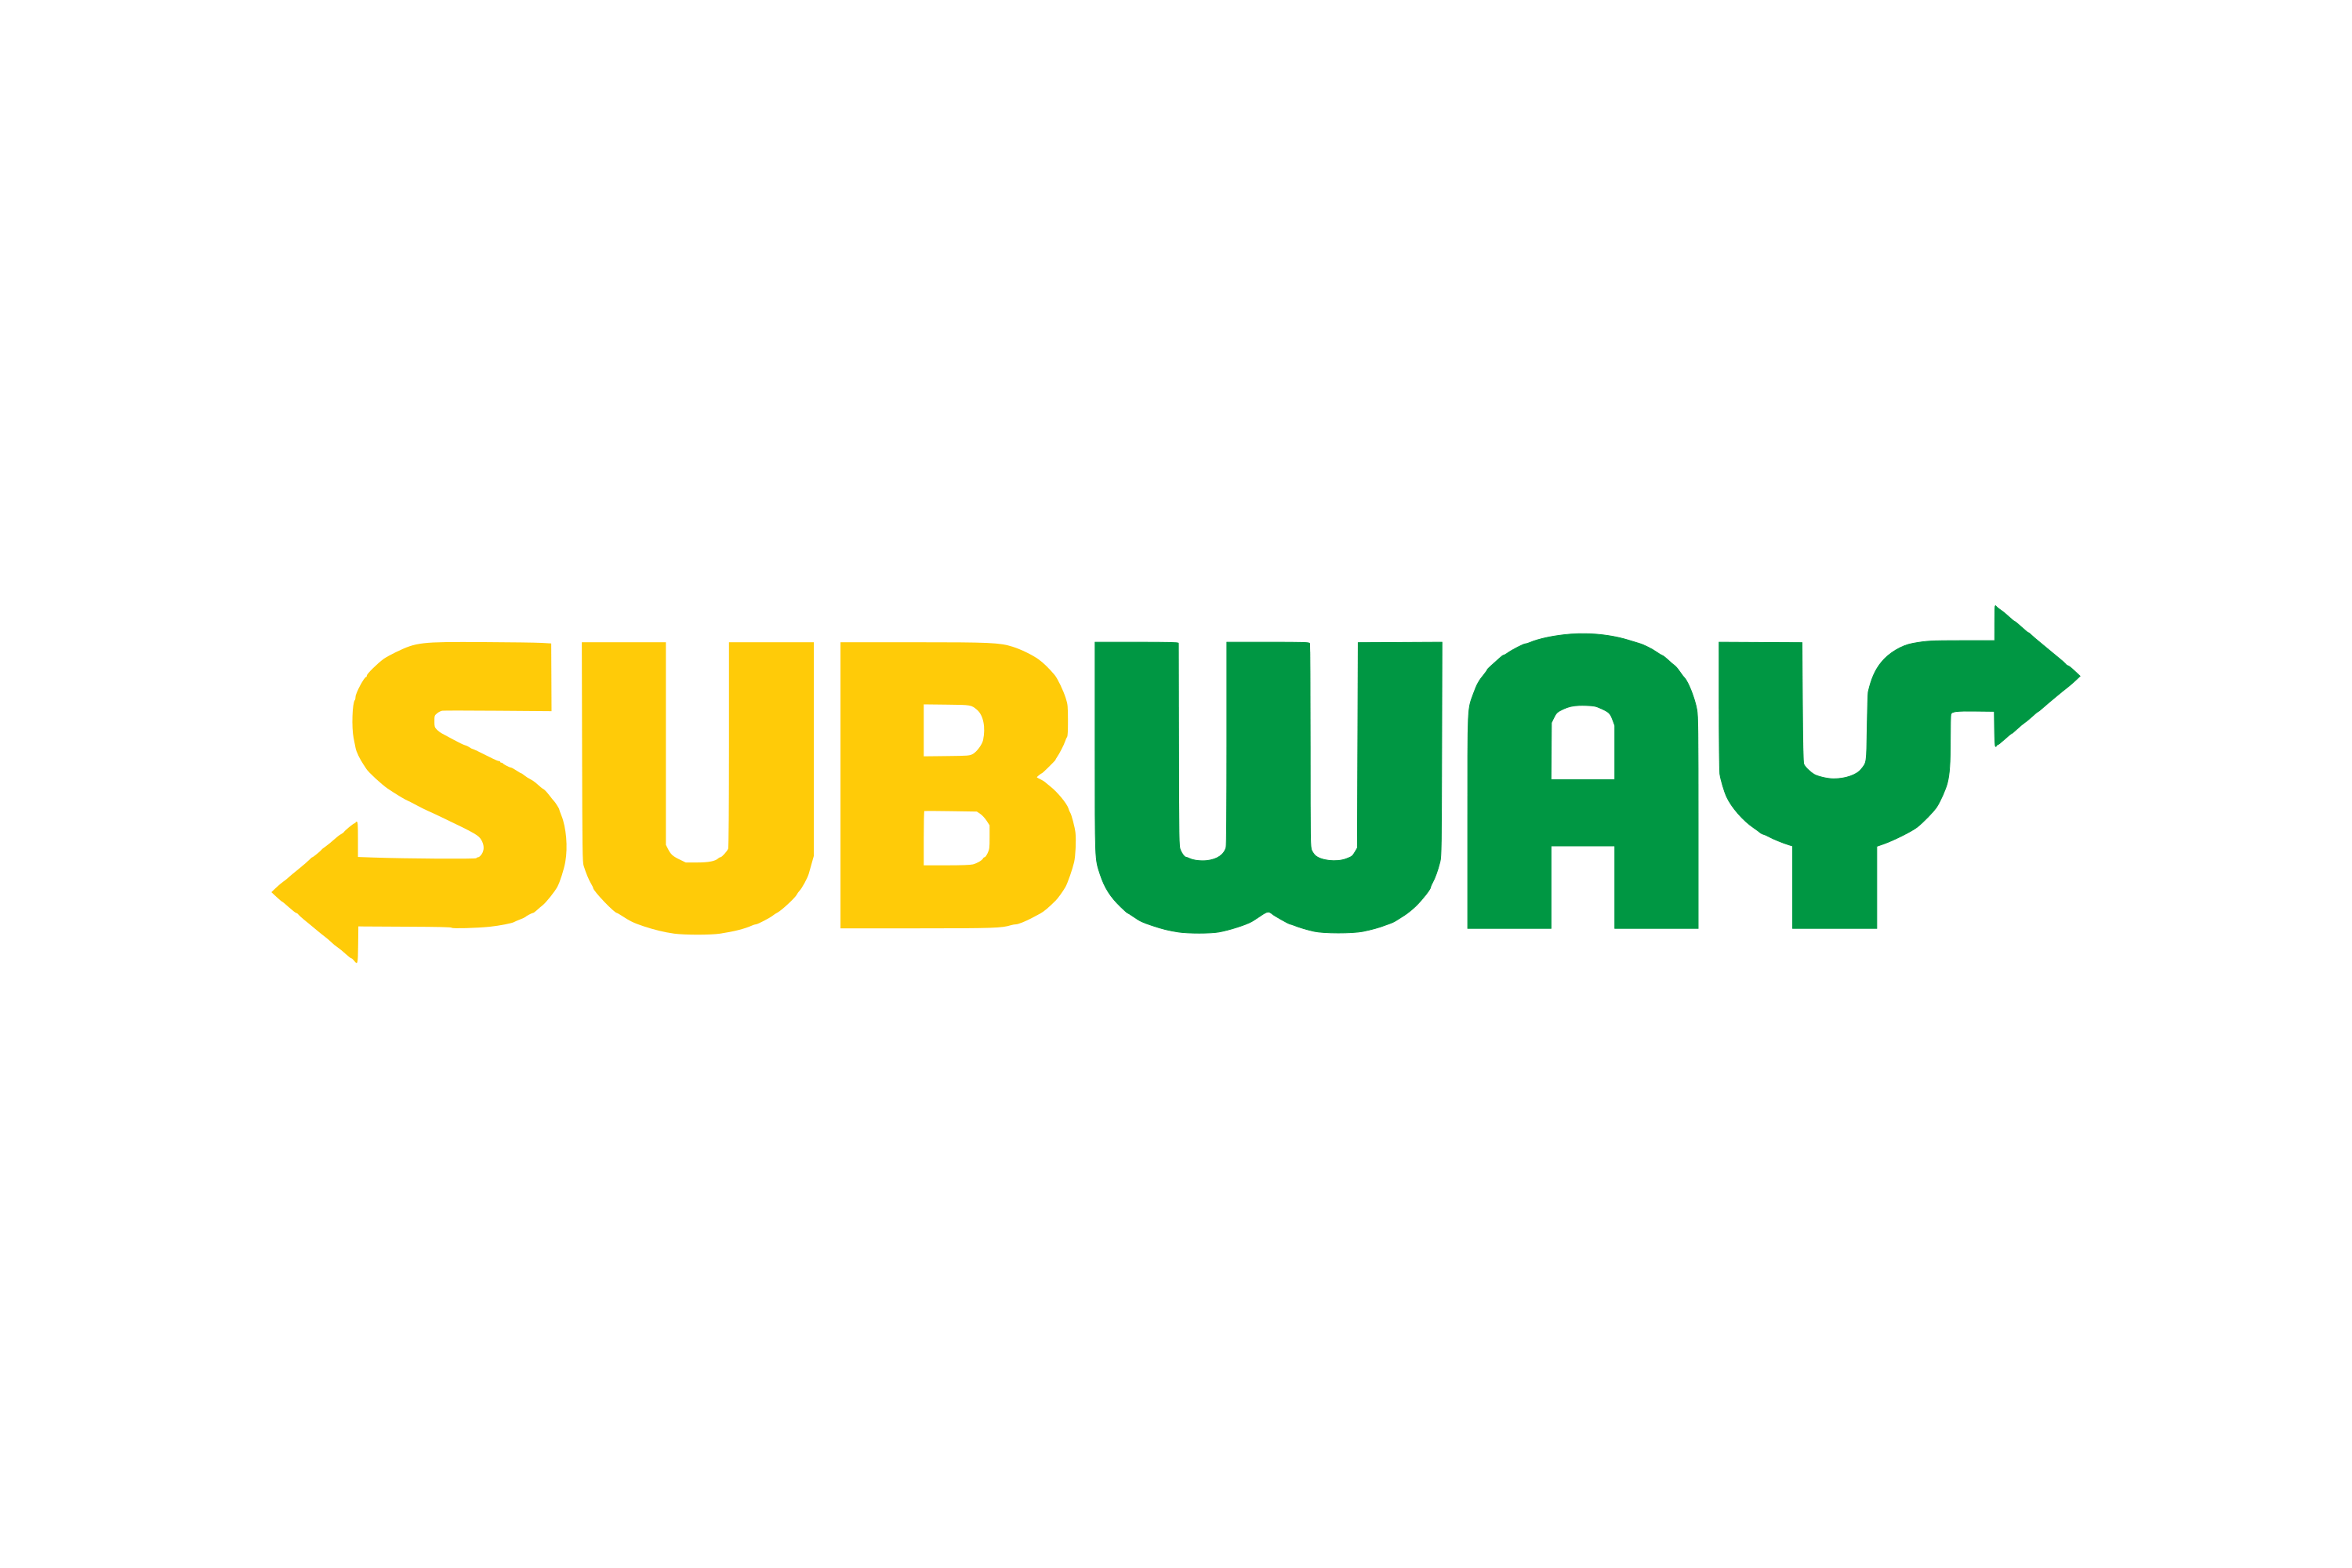 Submarine Sandwich Subway Fas